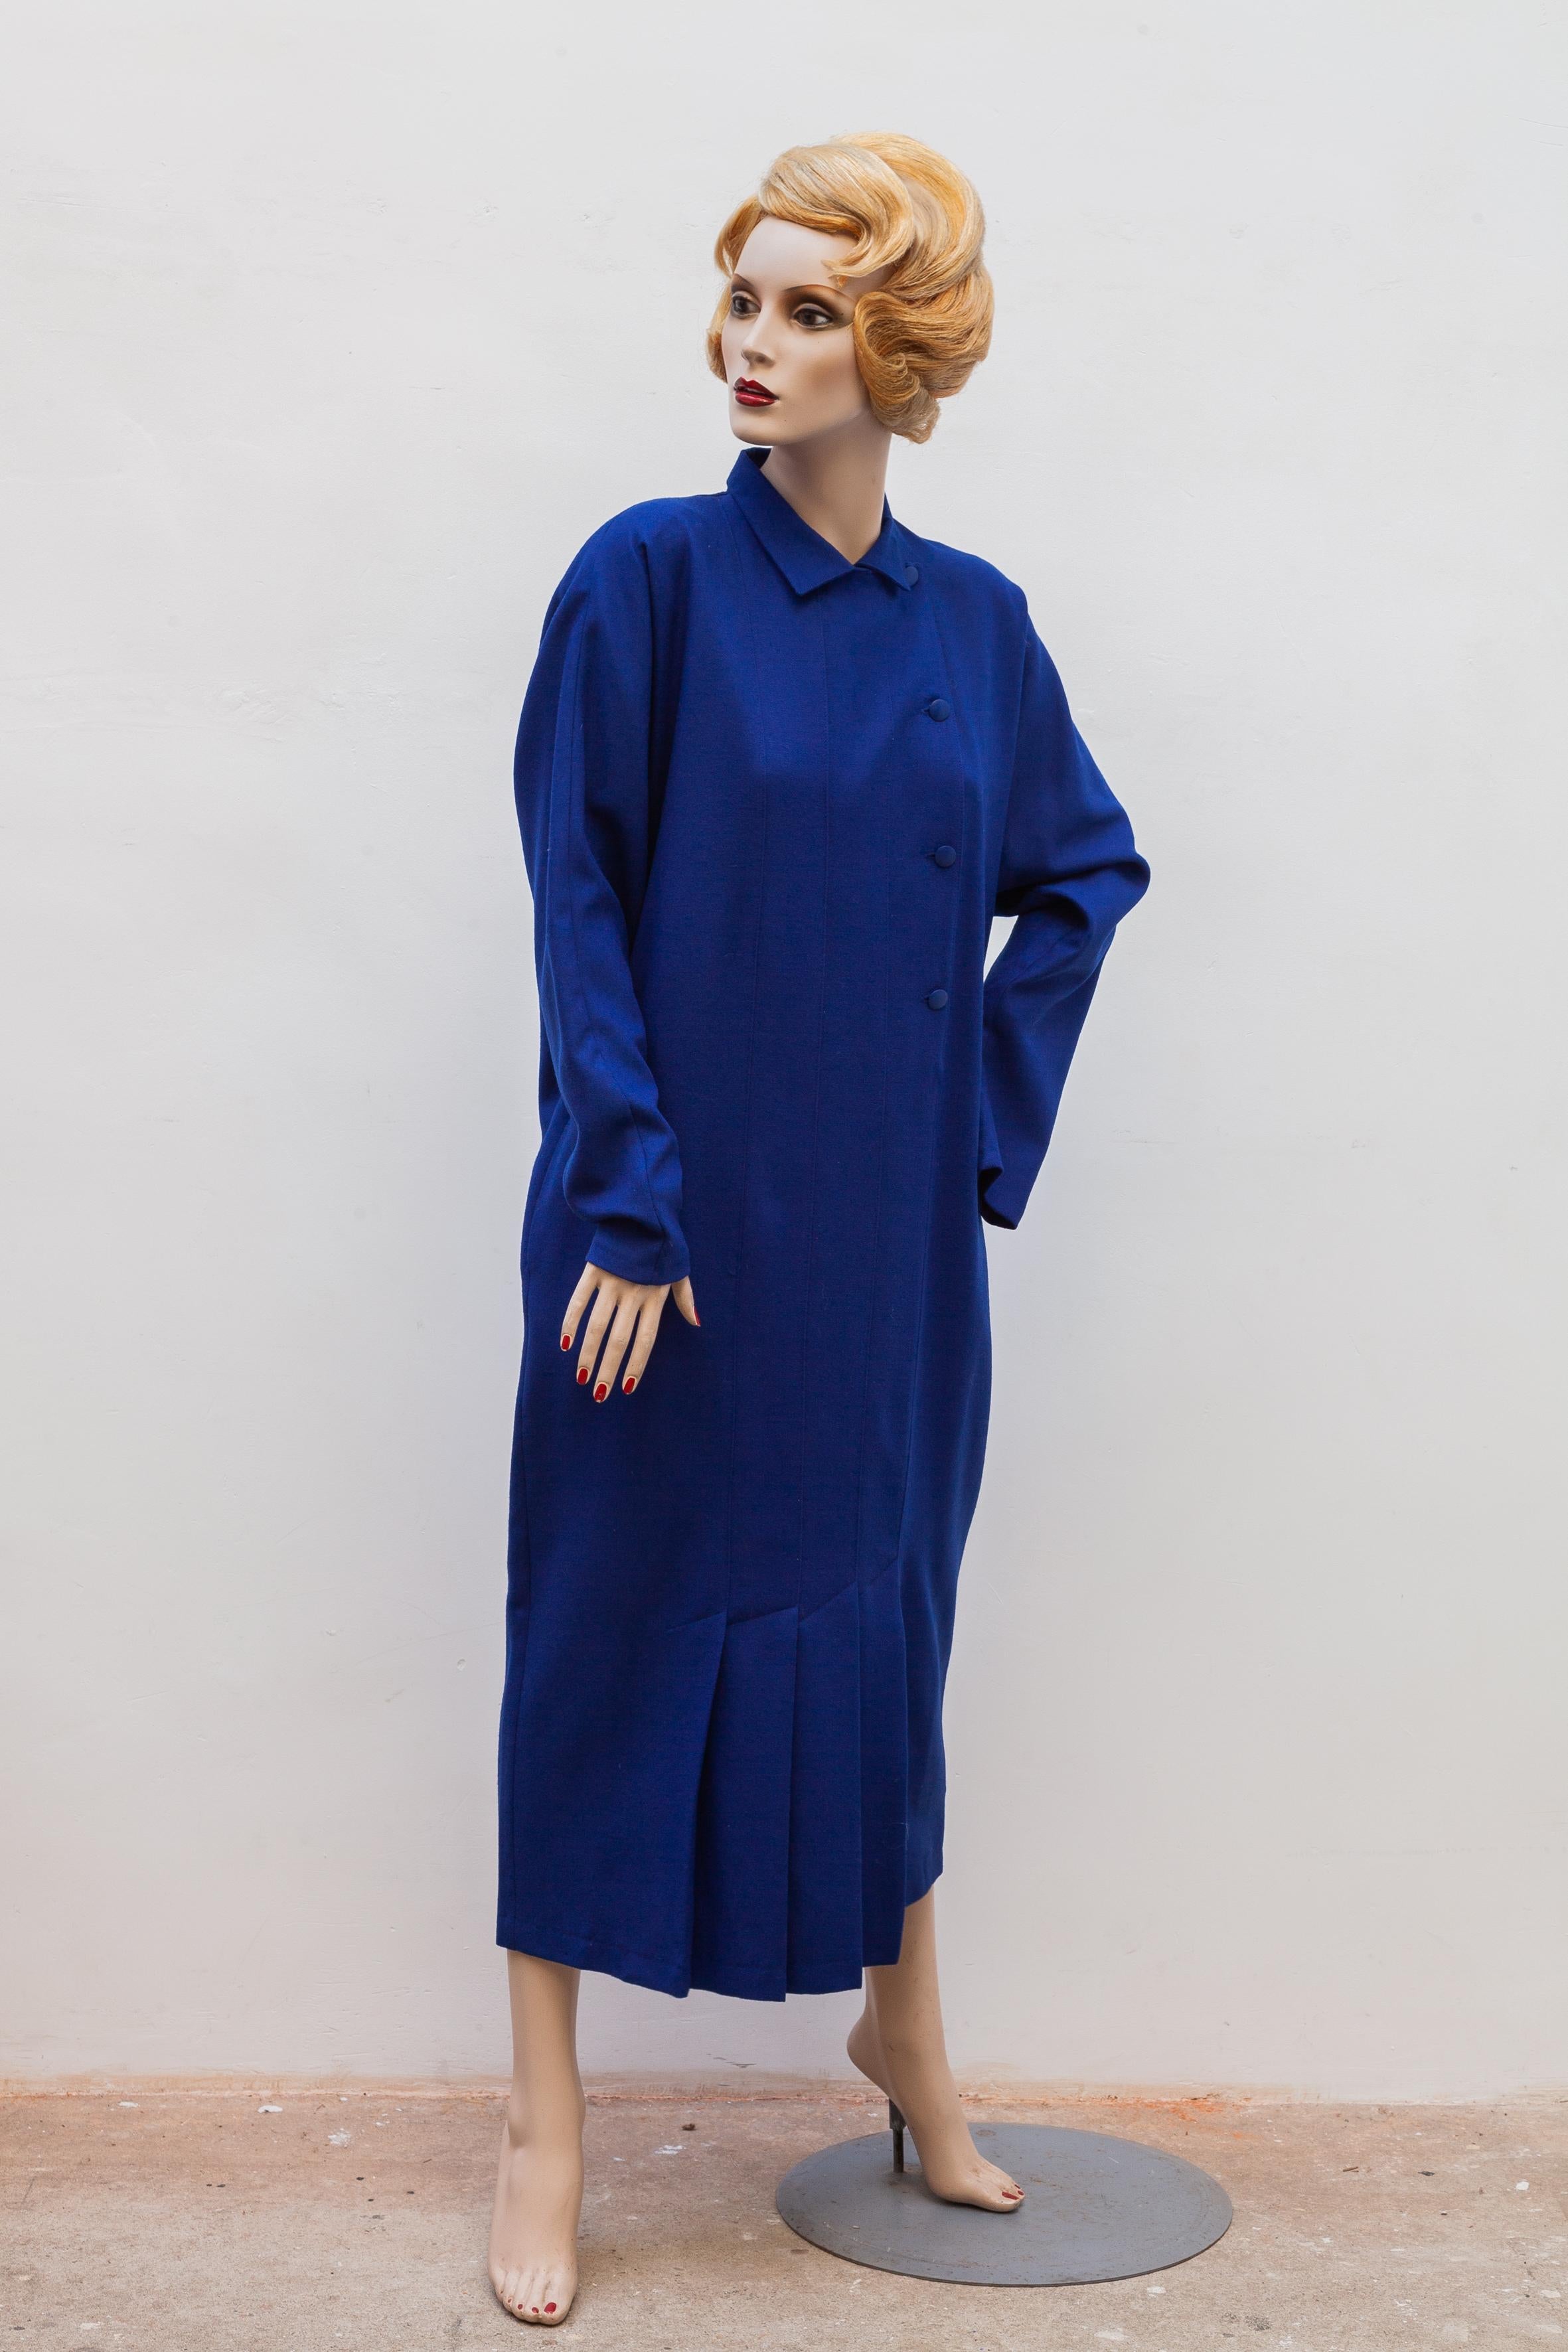 Vintage blue wool-blend coat dress by Hesselhoj. Unworn with original tags. Dolman sleeves and pleated skirt. Marked size US14 DK42 (Vintage)
Never Worn Fashion.
Armpit to Armpit: 63 cm
Shoulder to Shoulder: 50 cm
Waist: Free size
Hips: Free